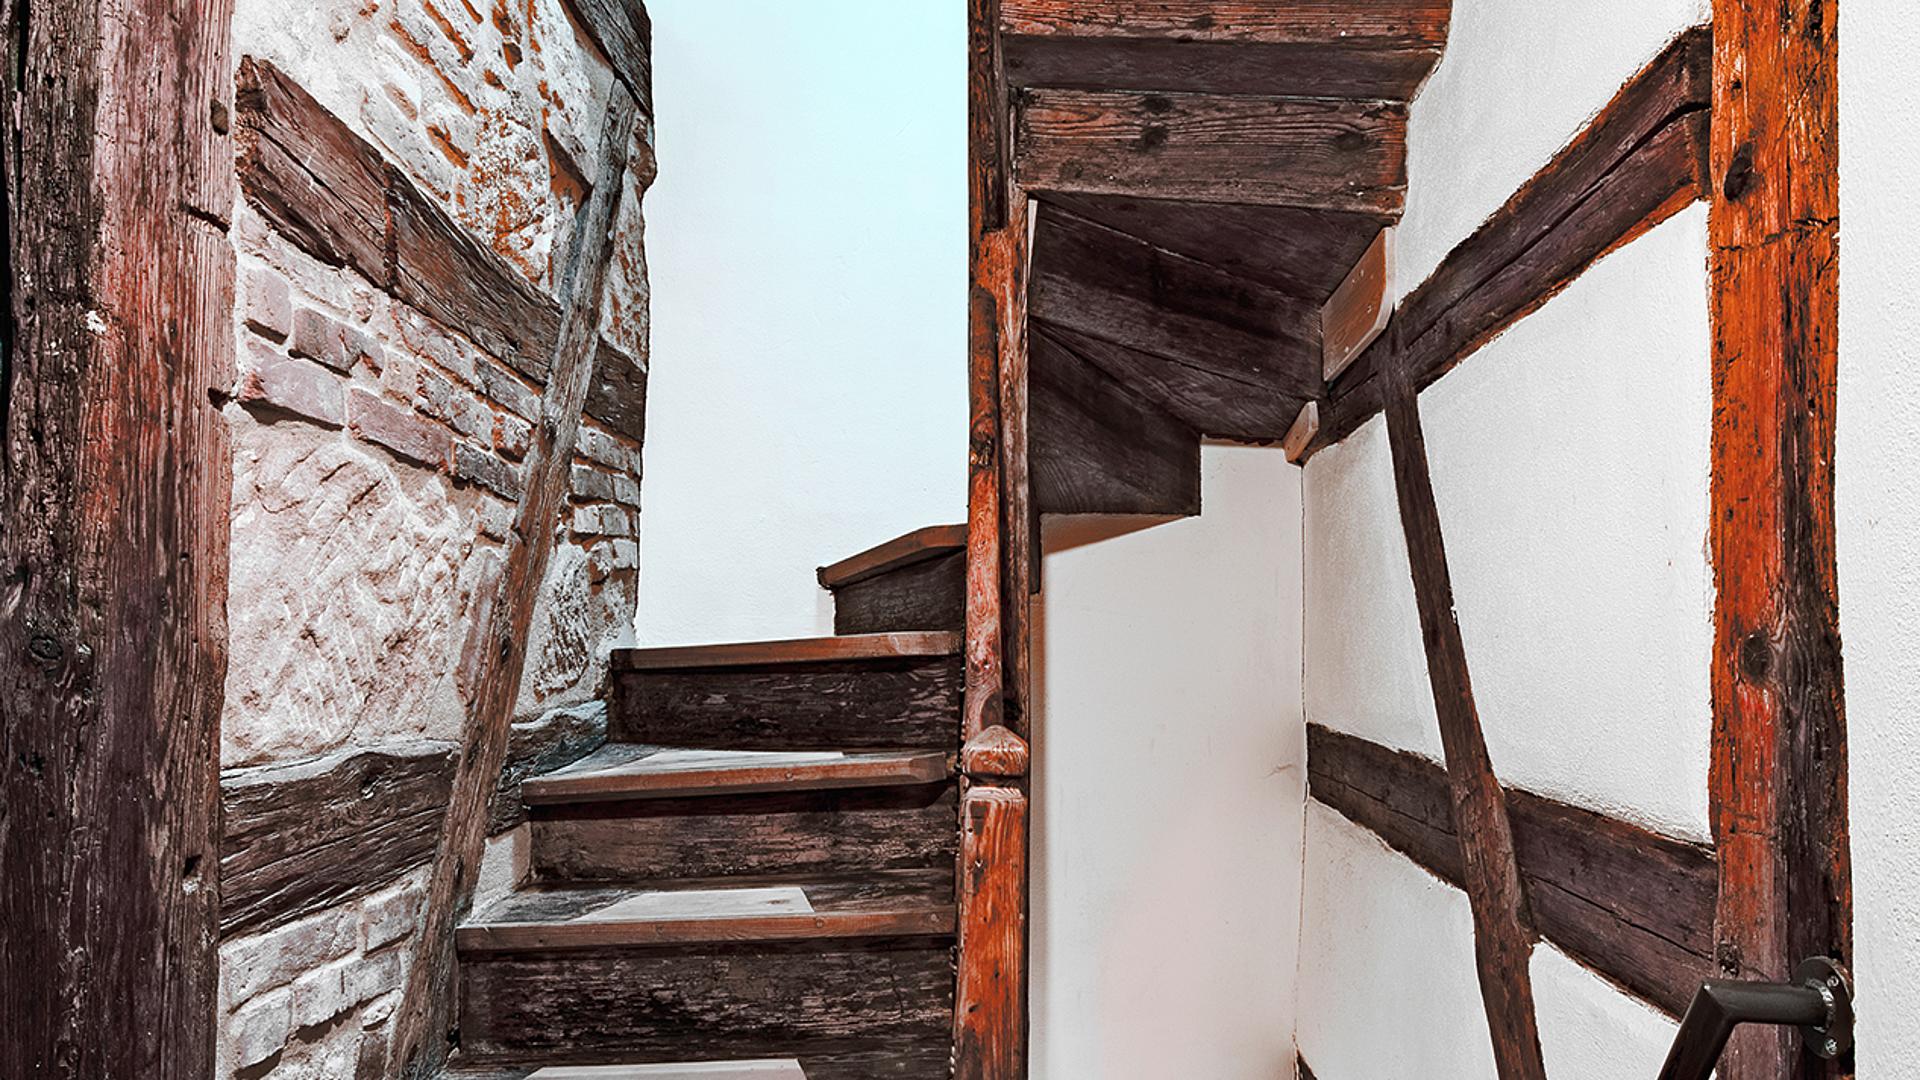 Bild: Treppenaufgang